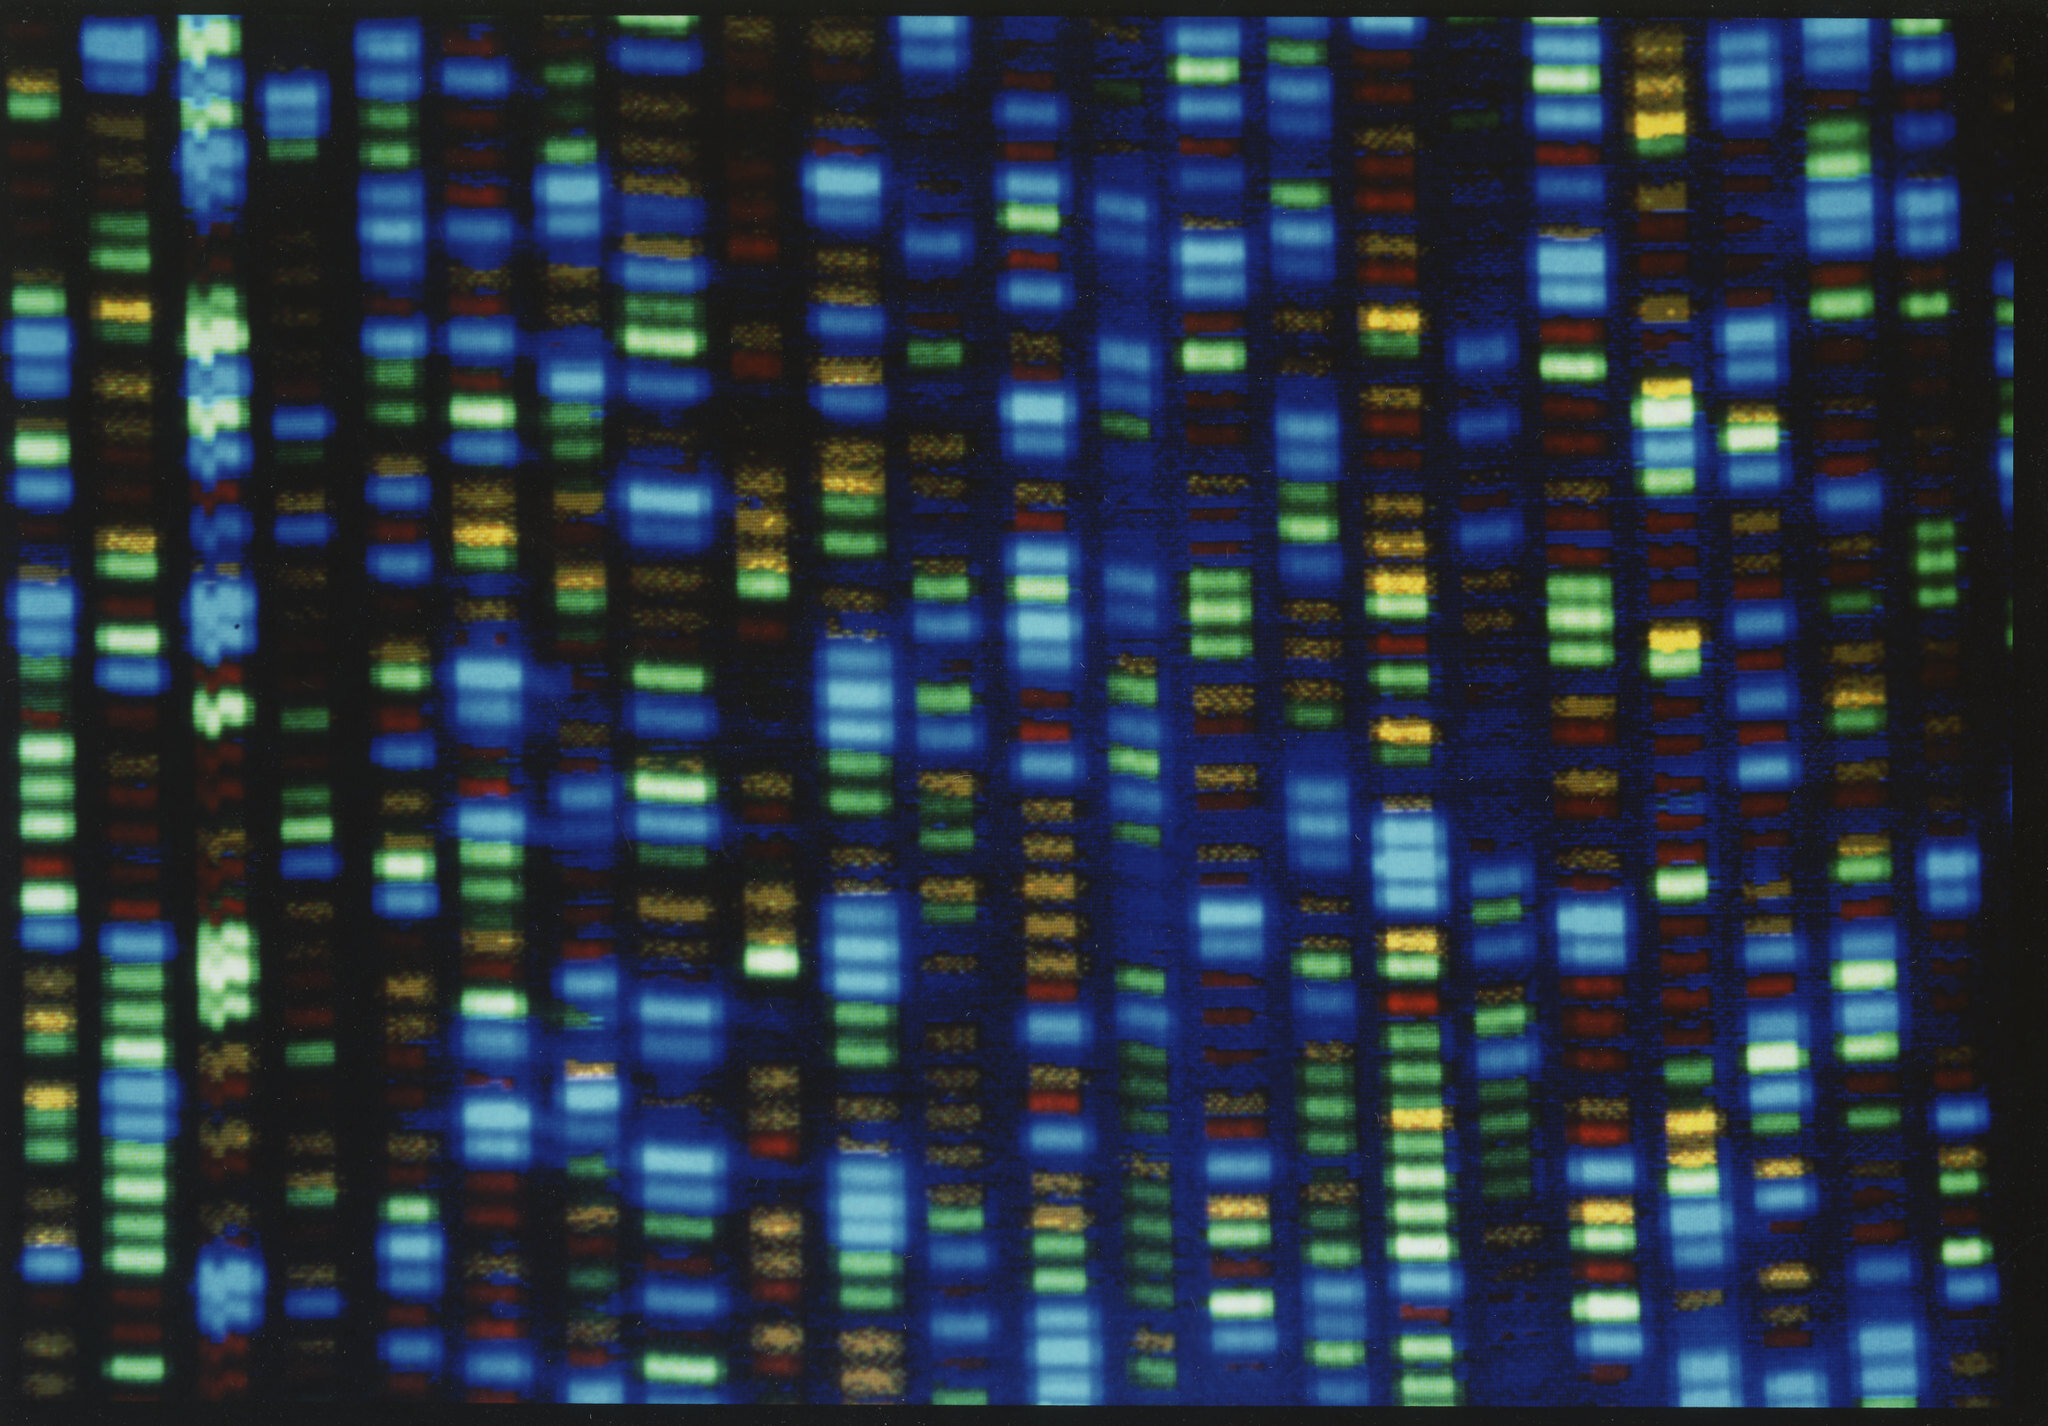 #Scientists finally finish decoding entire human genome